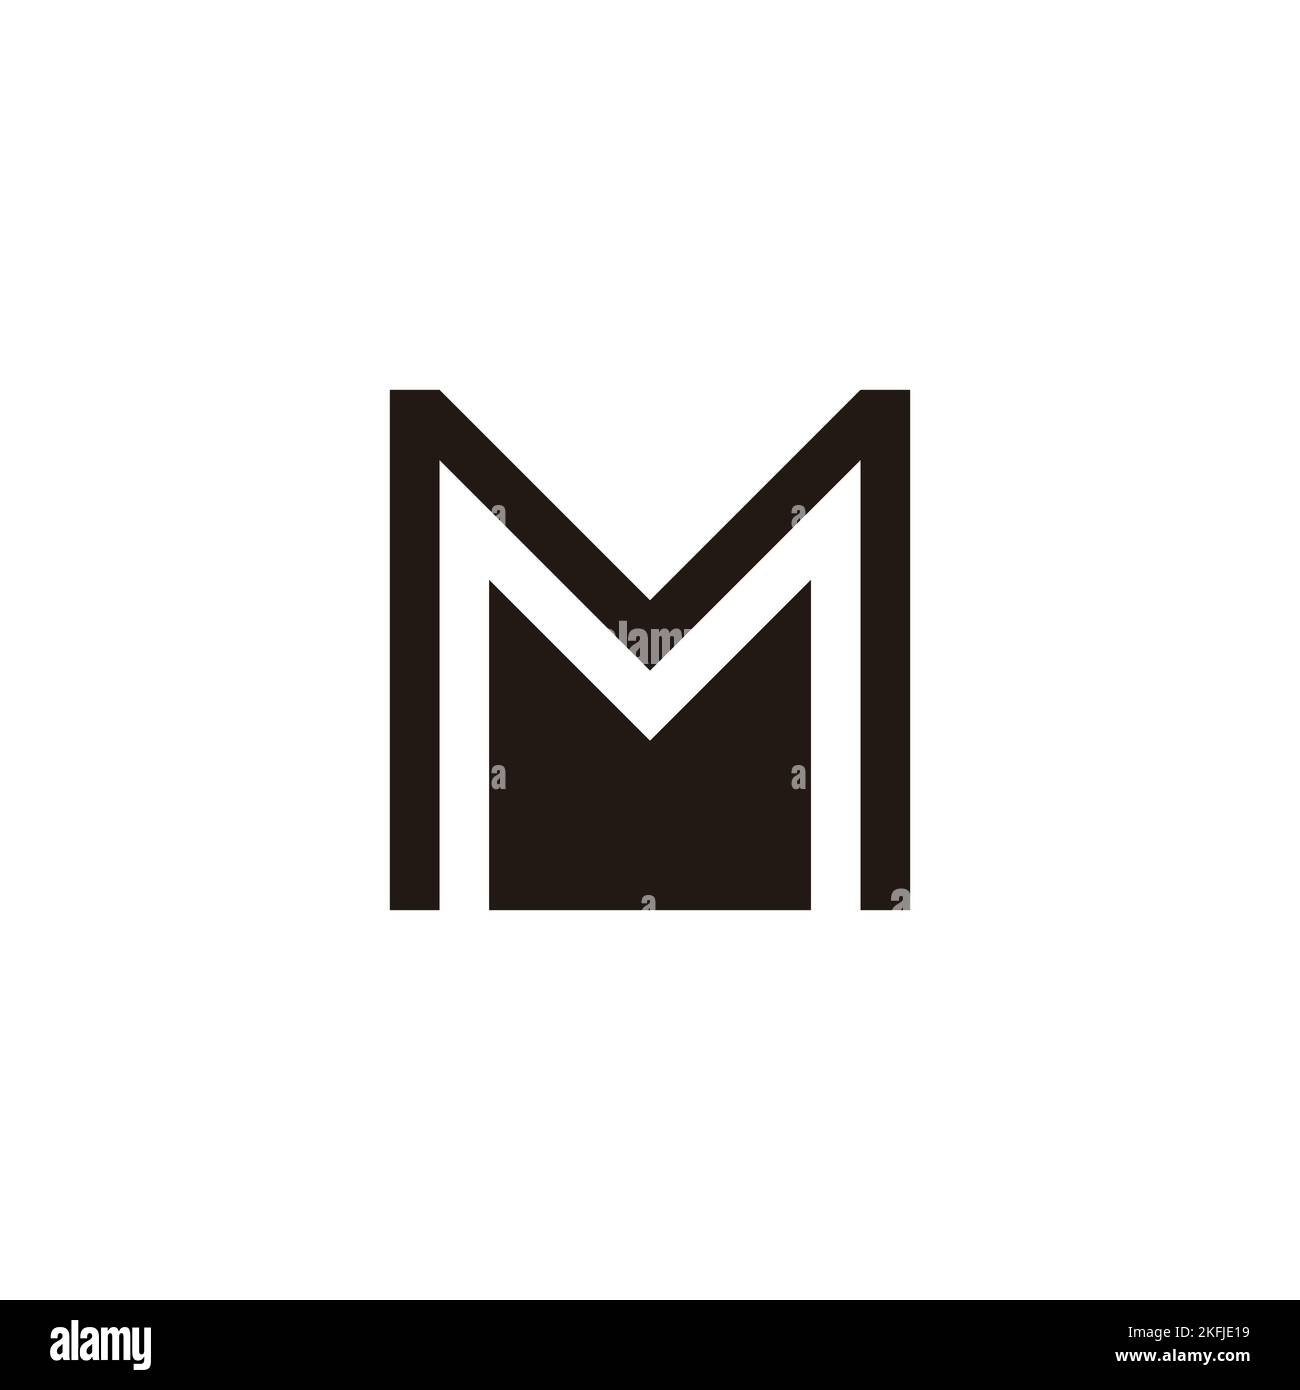 double m logo letter symbol icon design element, Stock vector